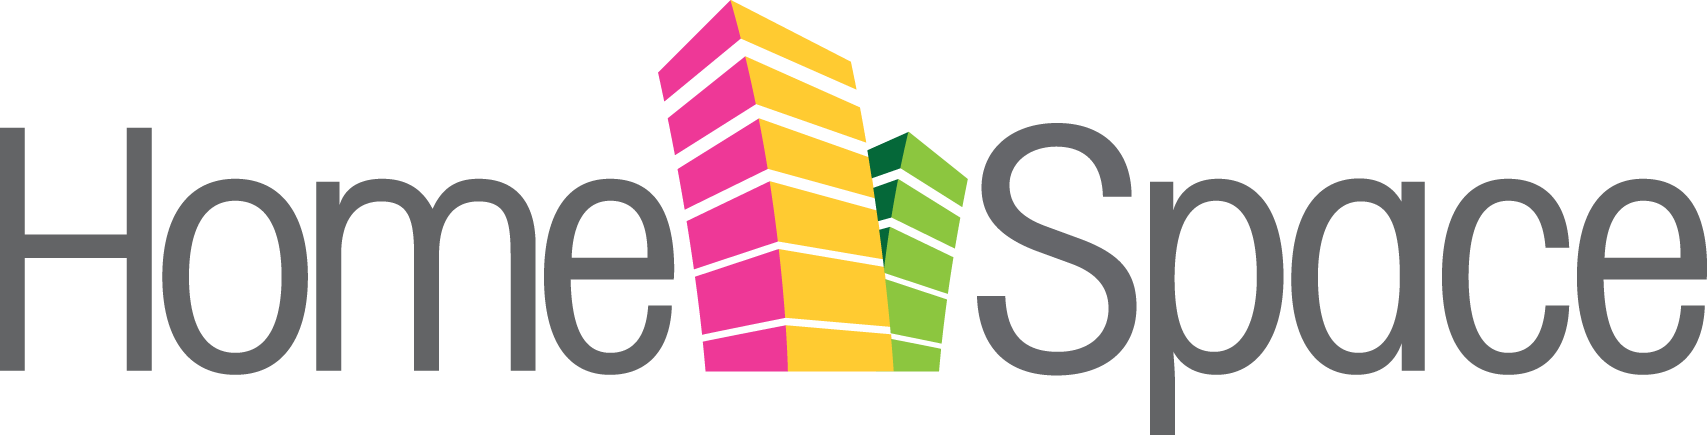 15 - homespace logo.png